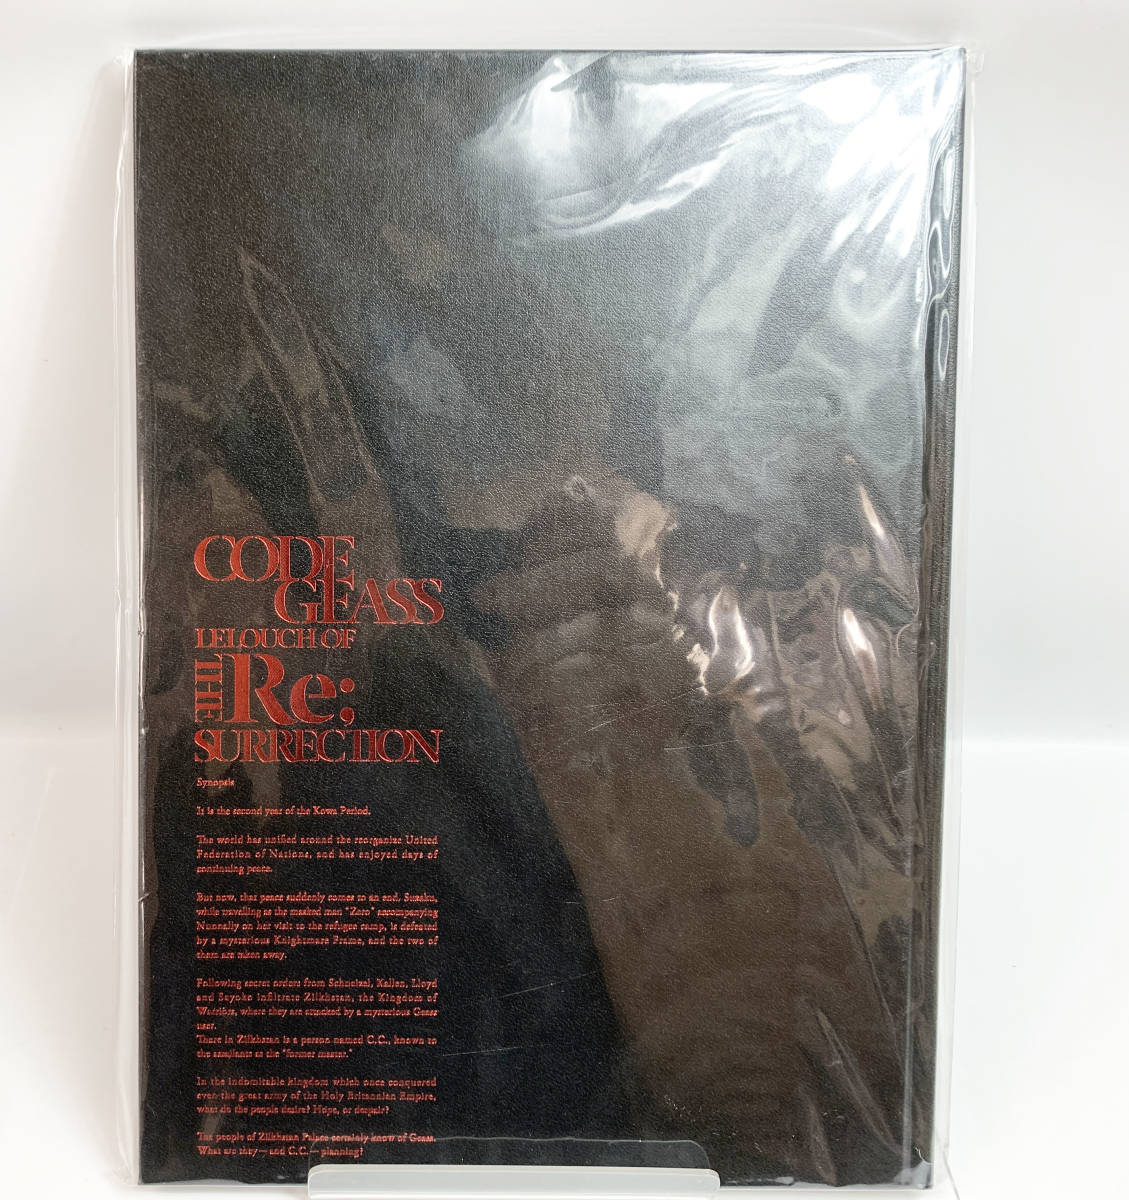  unopened goods Code Geas restoration. Leroux shu gorgeous version pamphlet movie theater version 7-16